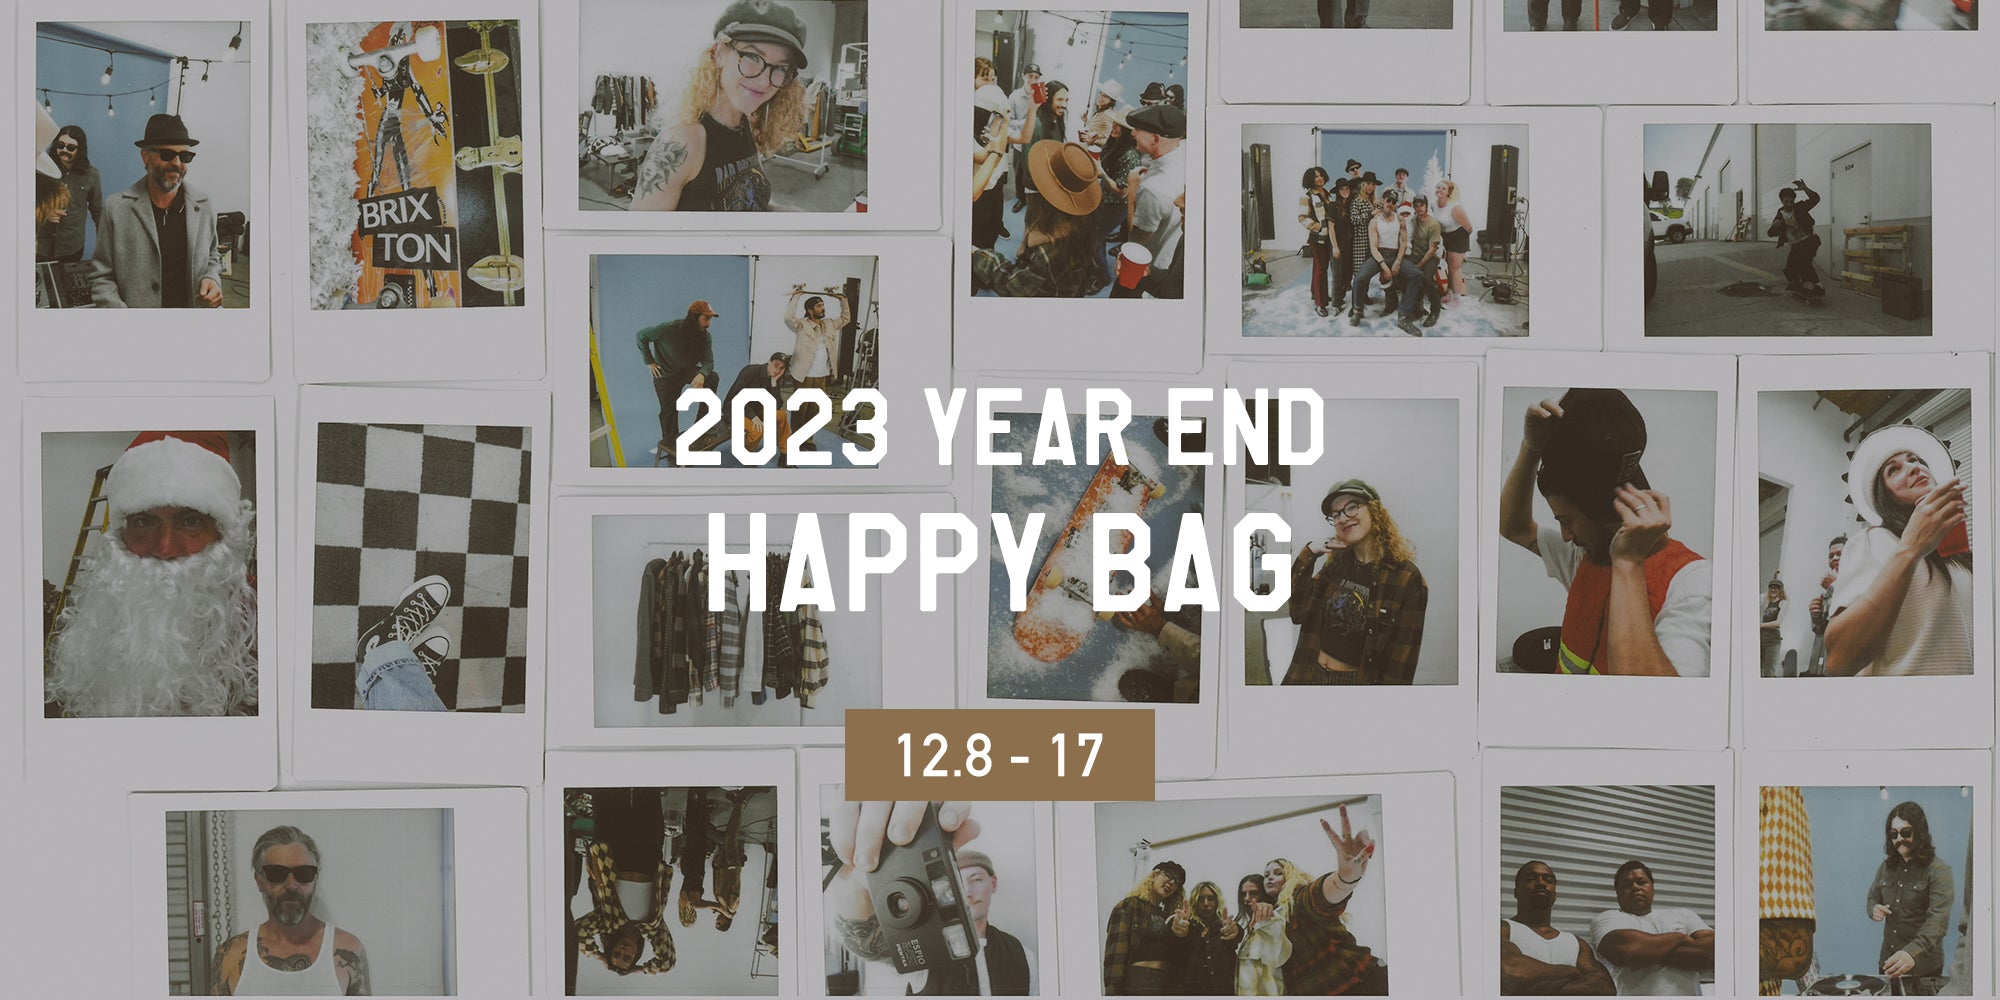 BRIXTON 2023 YEAR END HAPPY BAG